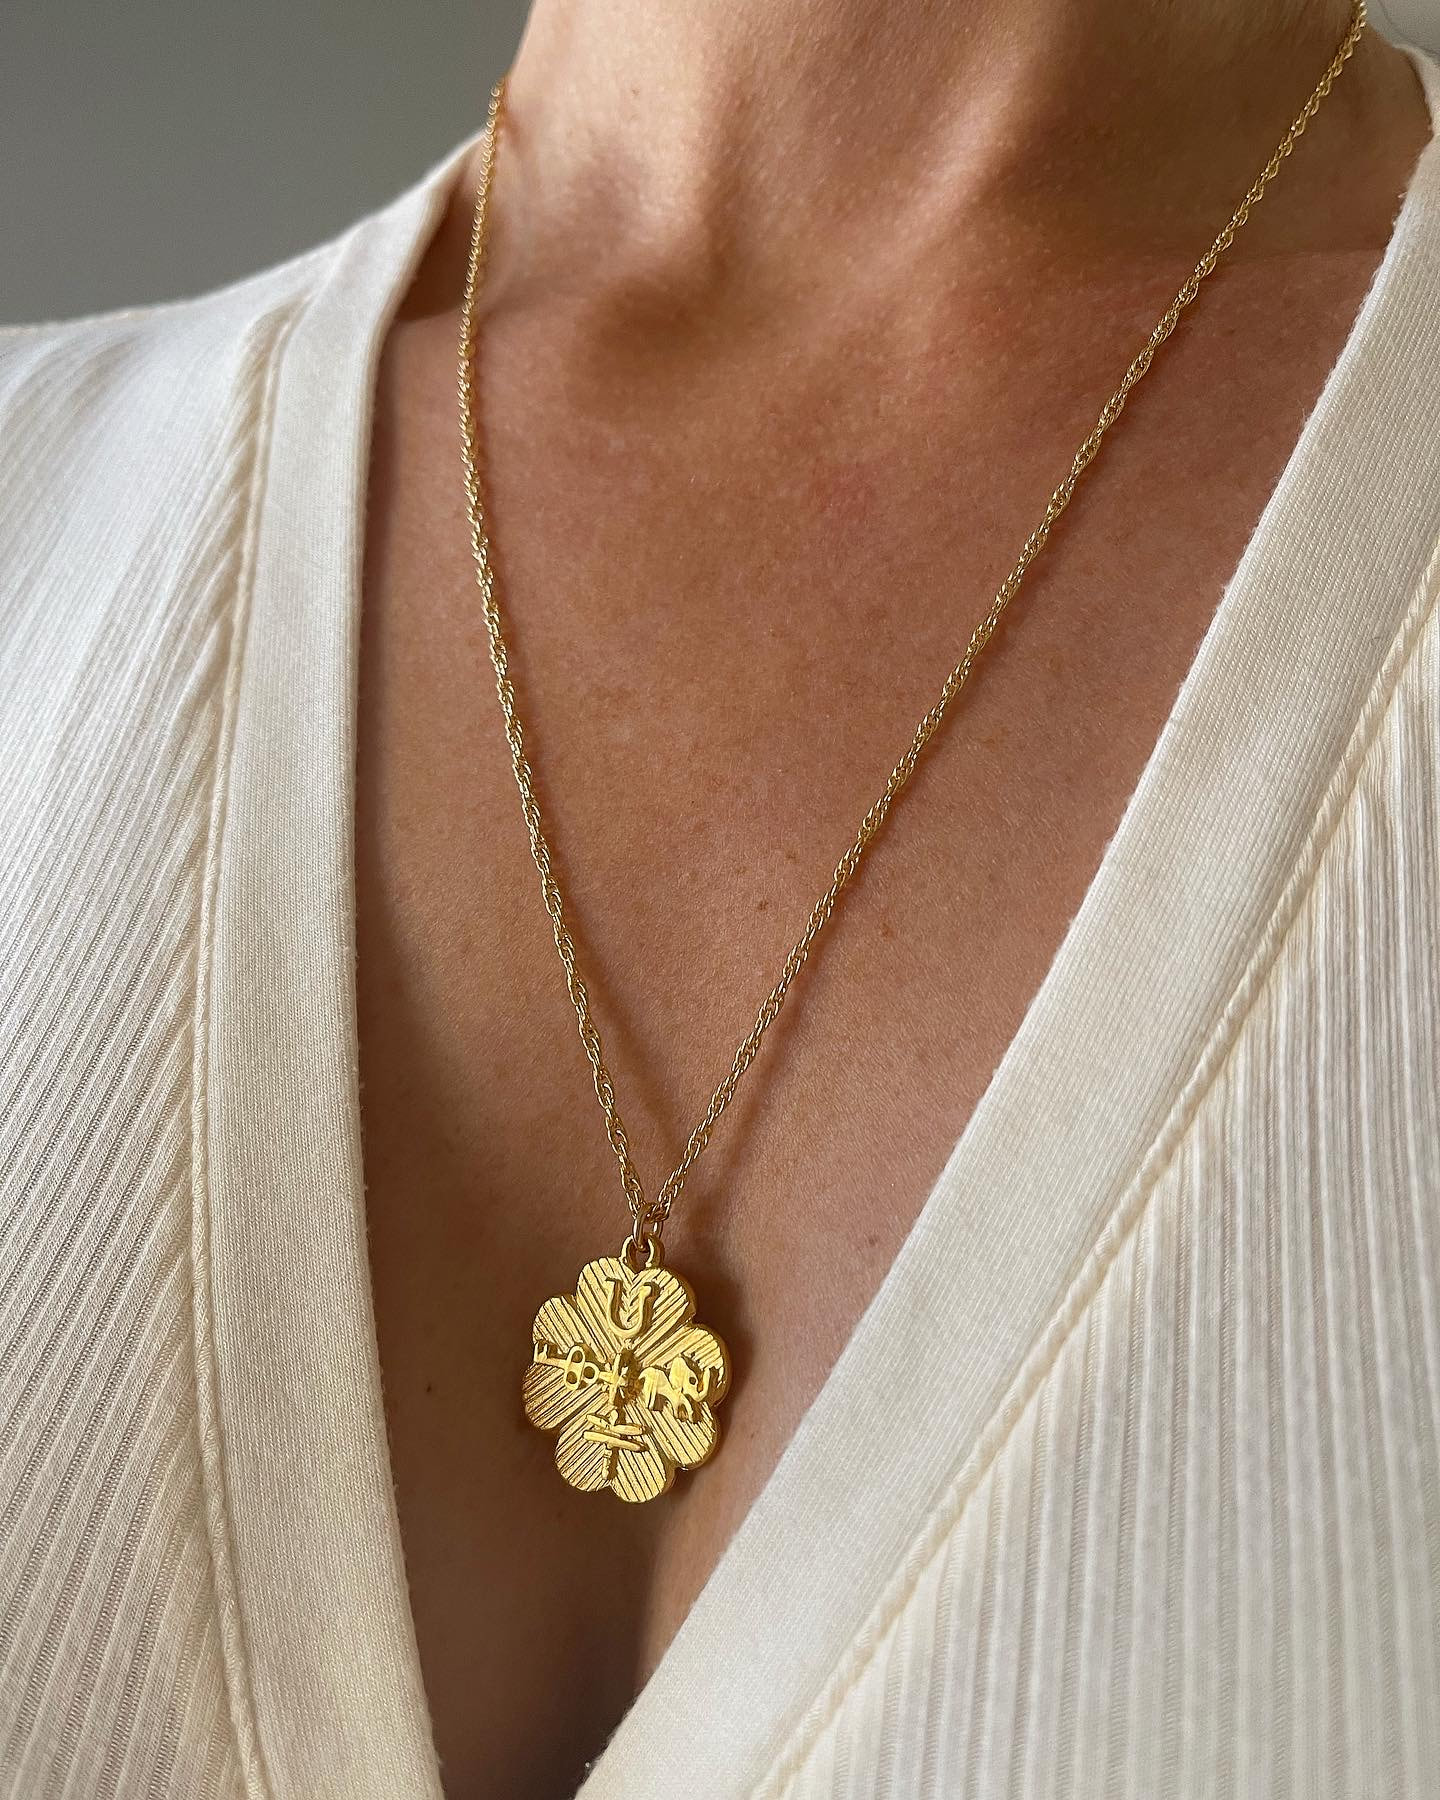 Tiffany & Co. Necklace Pendant Sterling Silver 925 Clover | eBay